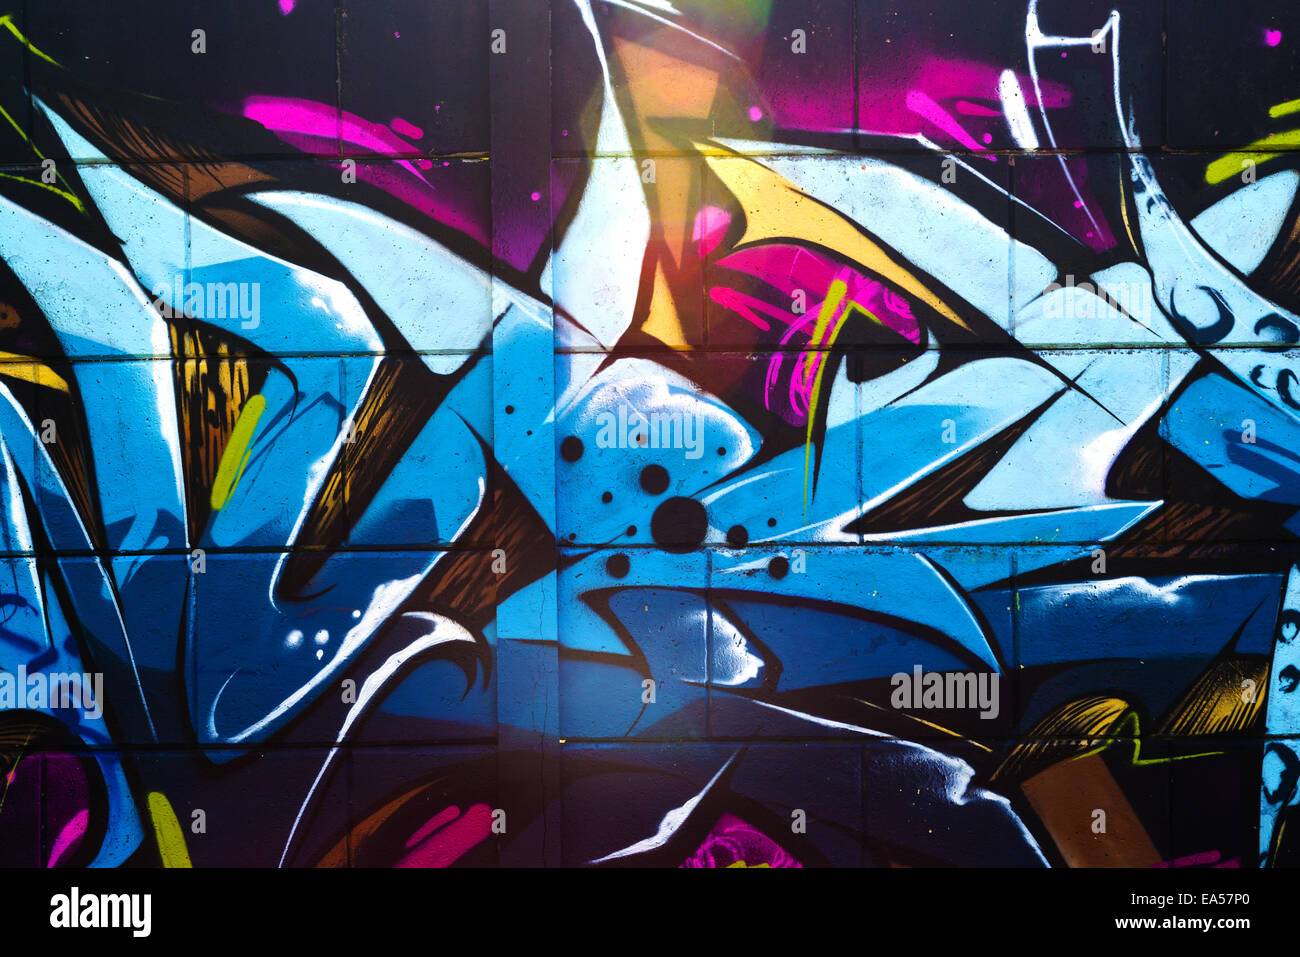 Arte de la calle graffiti, vibrante detalle multicolor de arte de graffiti en la pared. Foto de stock